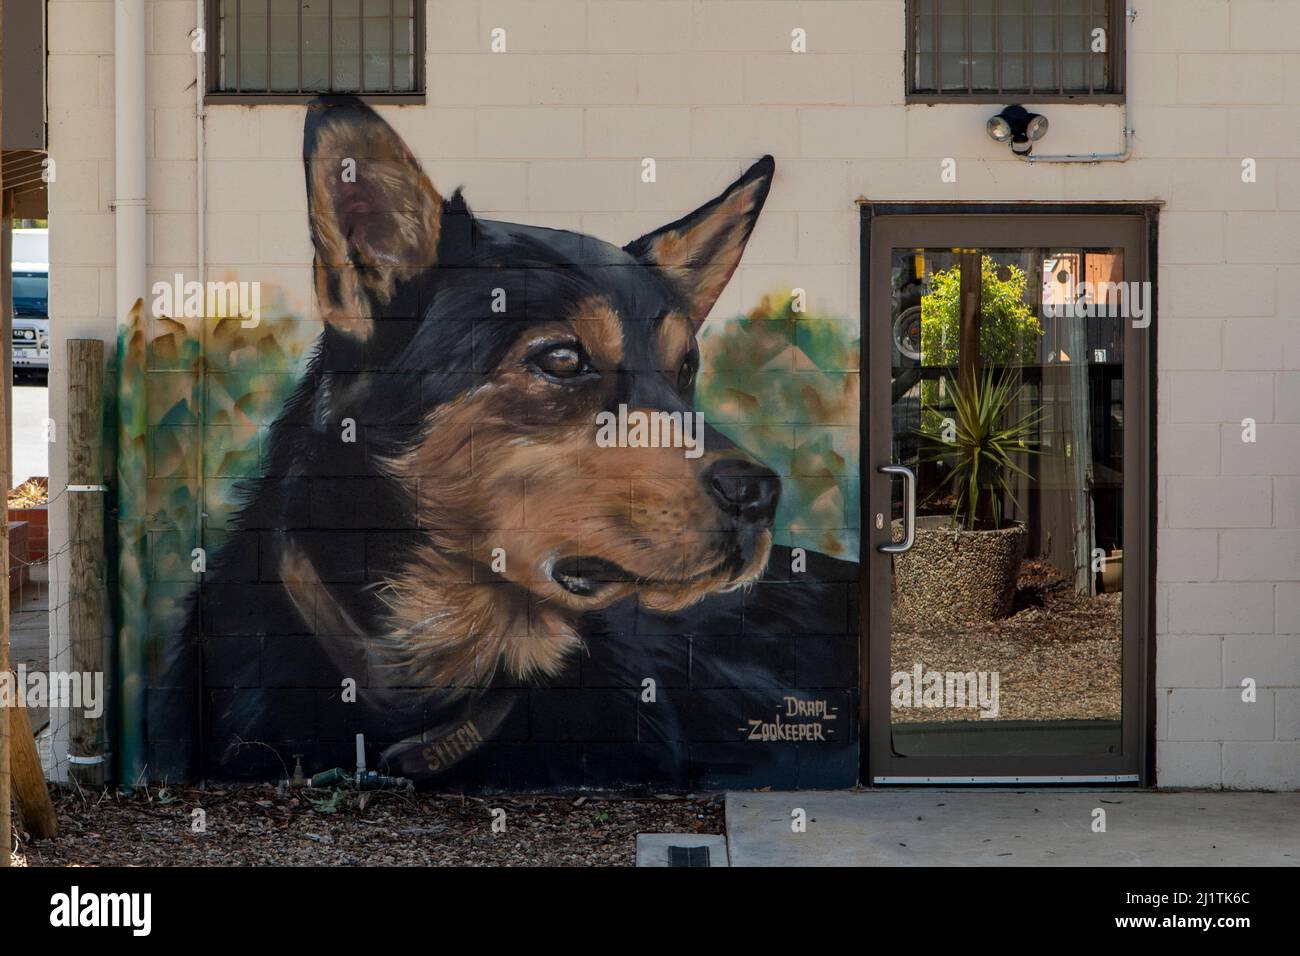 Working Dog Street Art, Sea Lake, Victoria, Australia Stock Photo